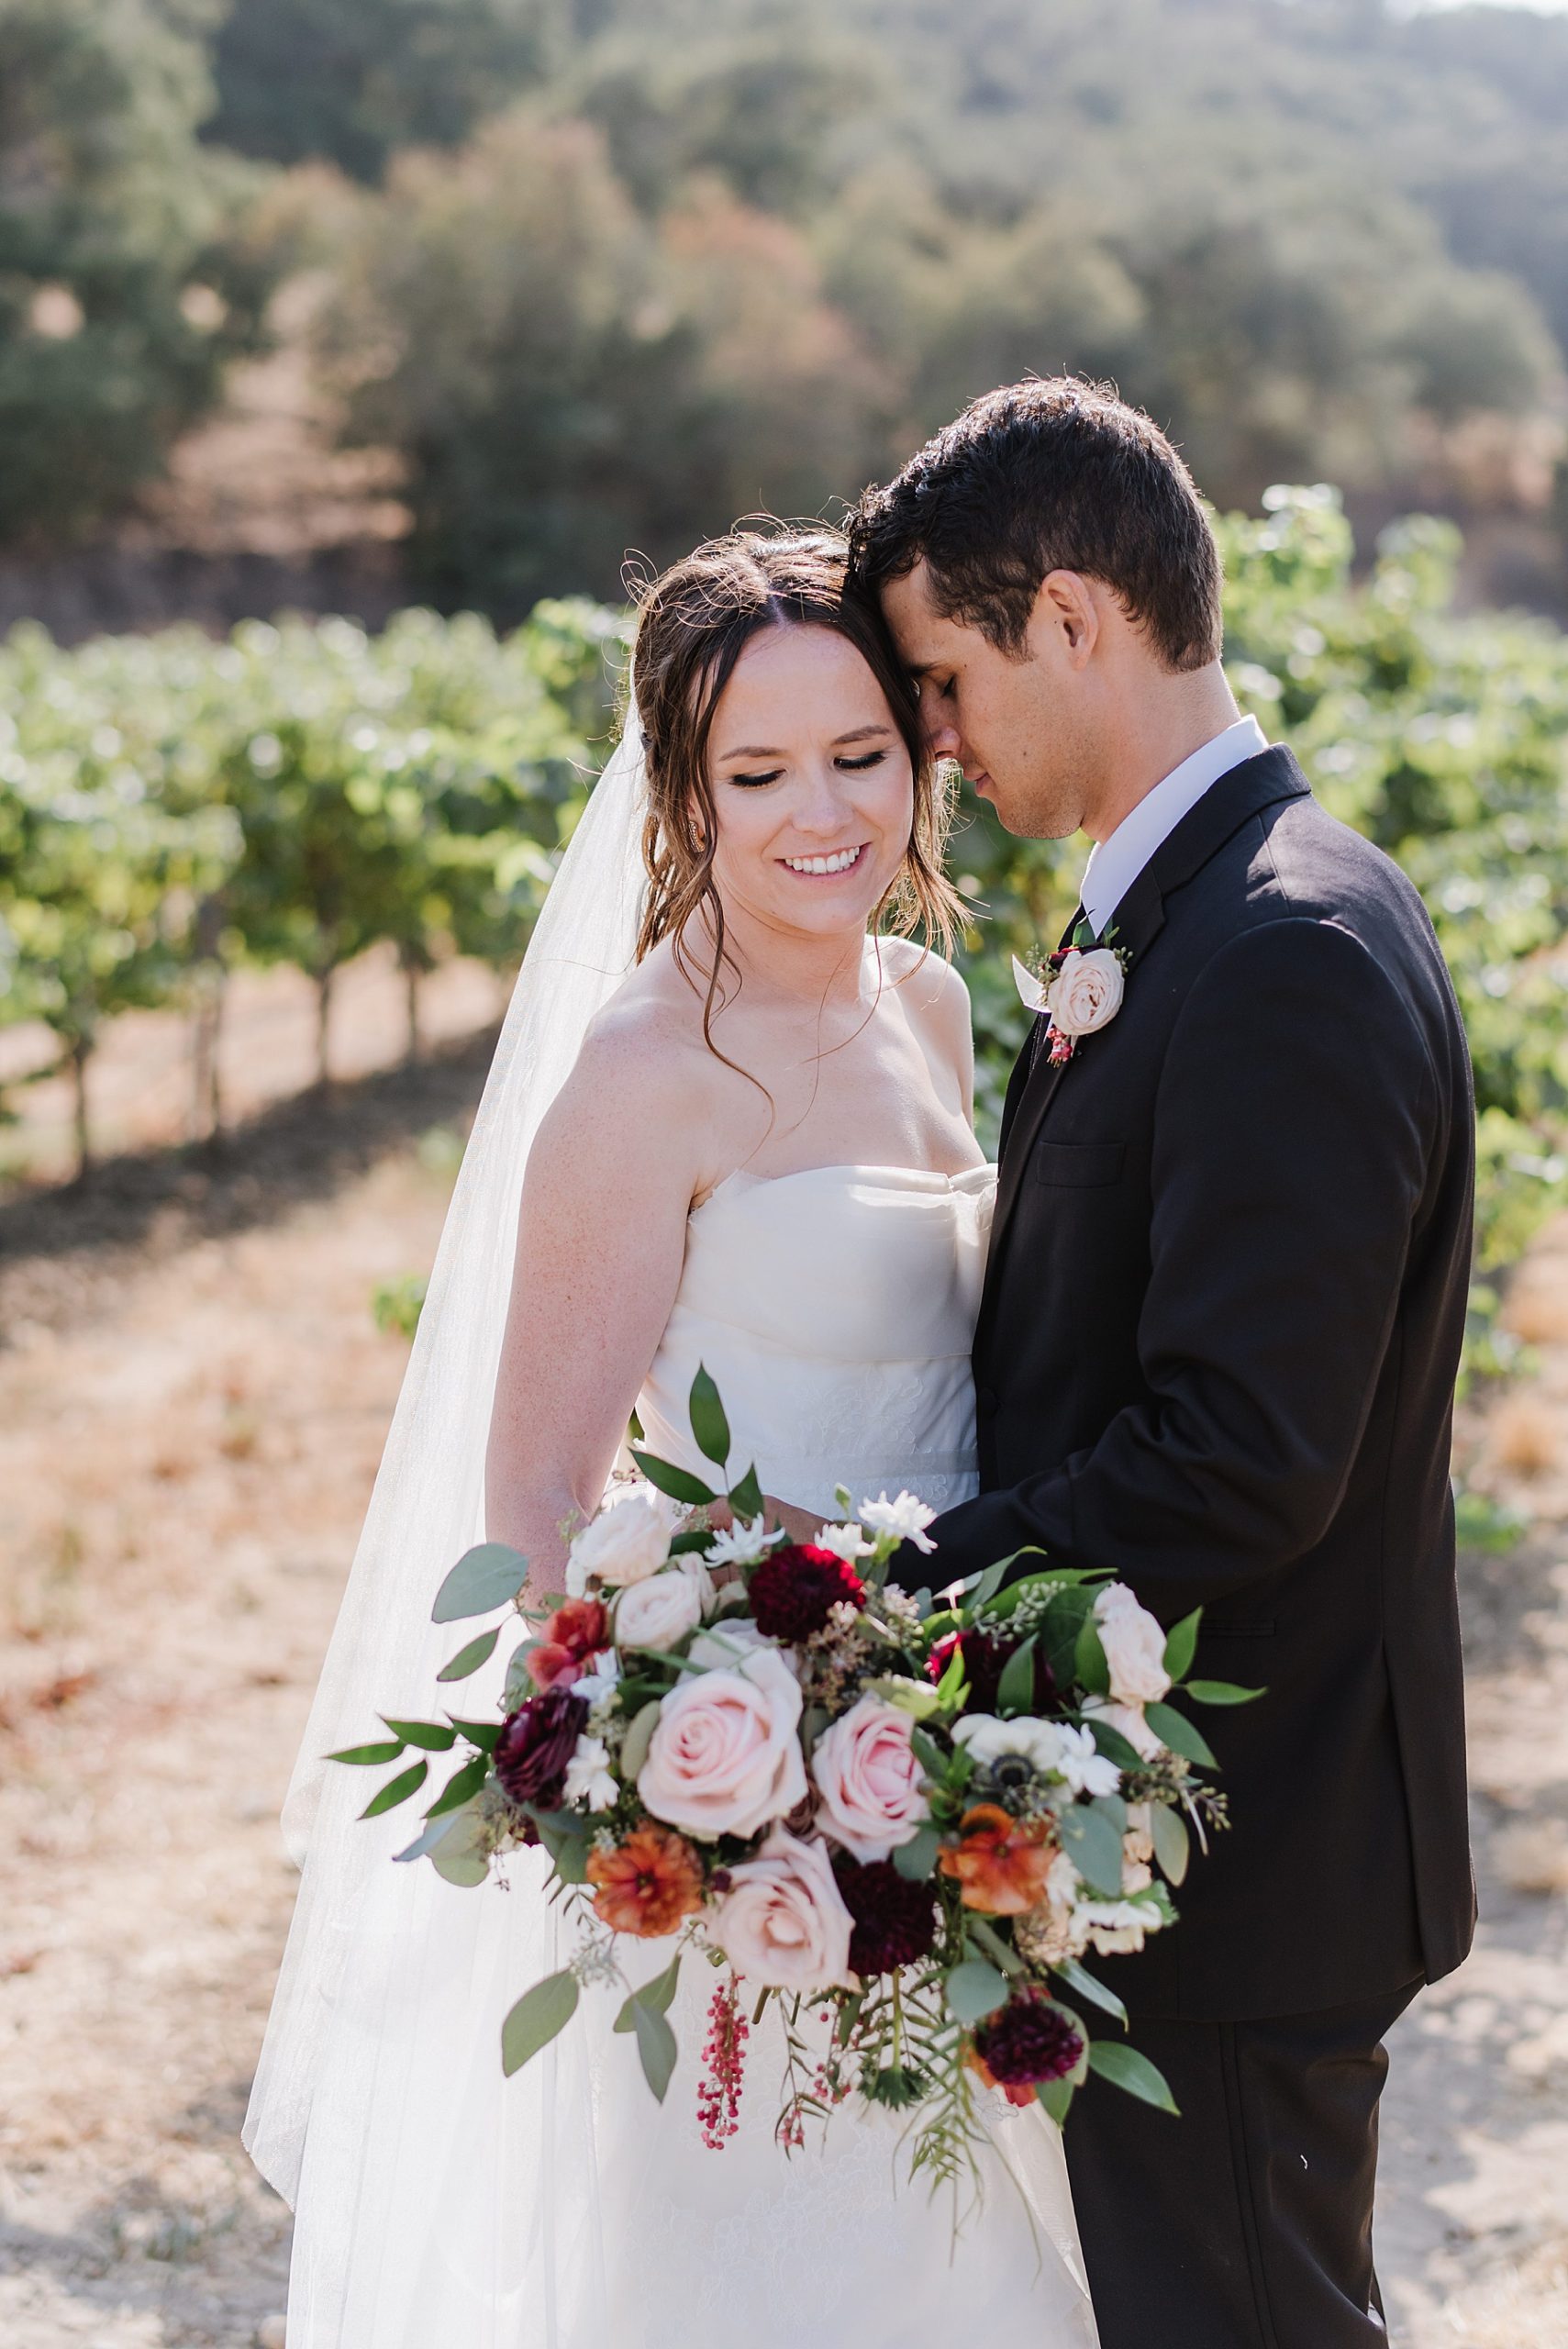 Riverbench Vineyard & Winery Luxury Fall Wedding in Santa Maria, California